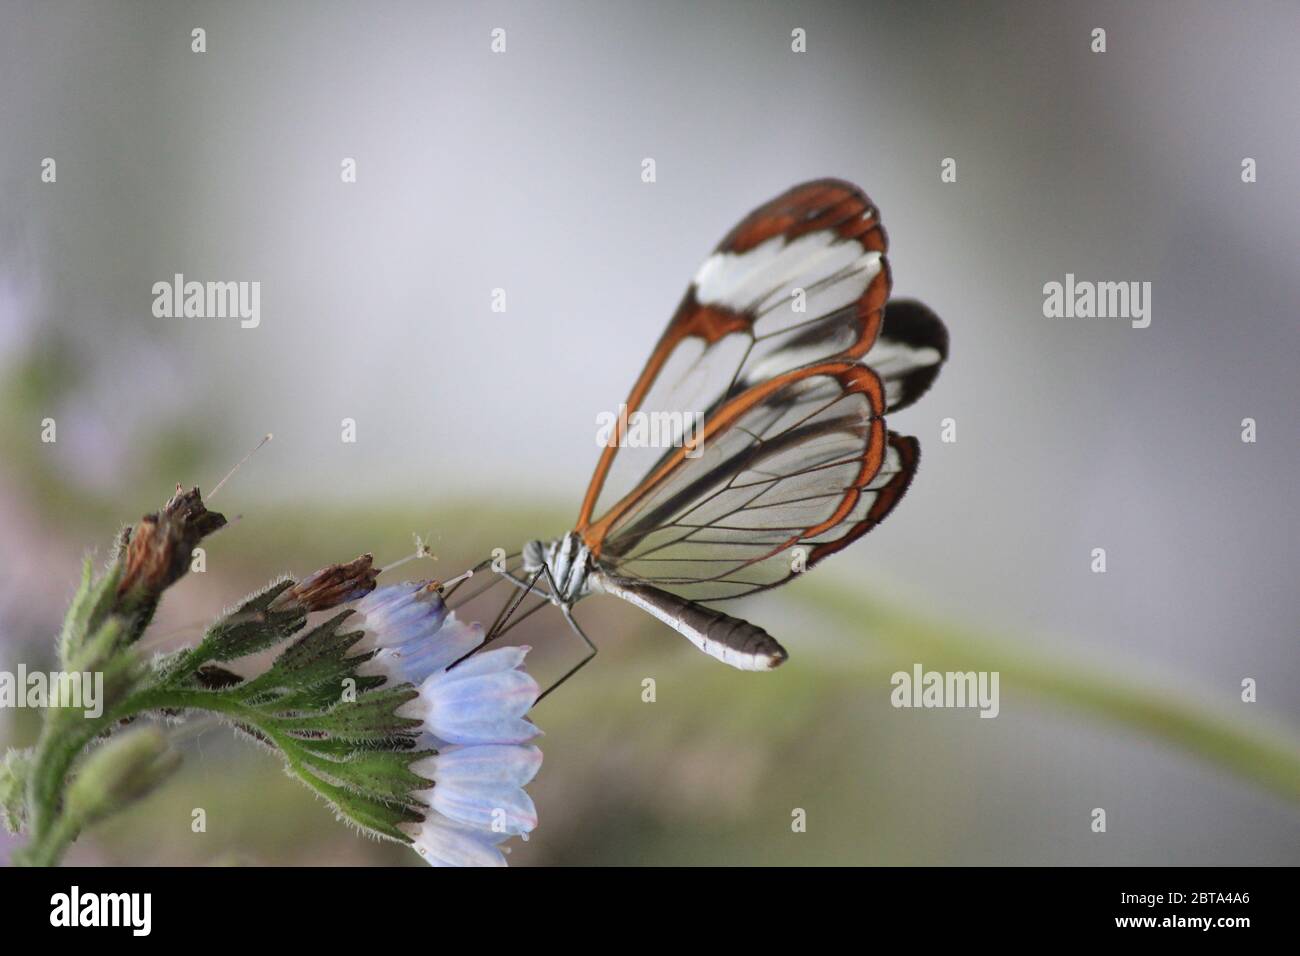 Glasswing butterfly Stock Photo